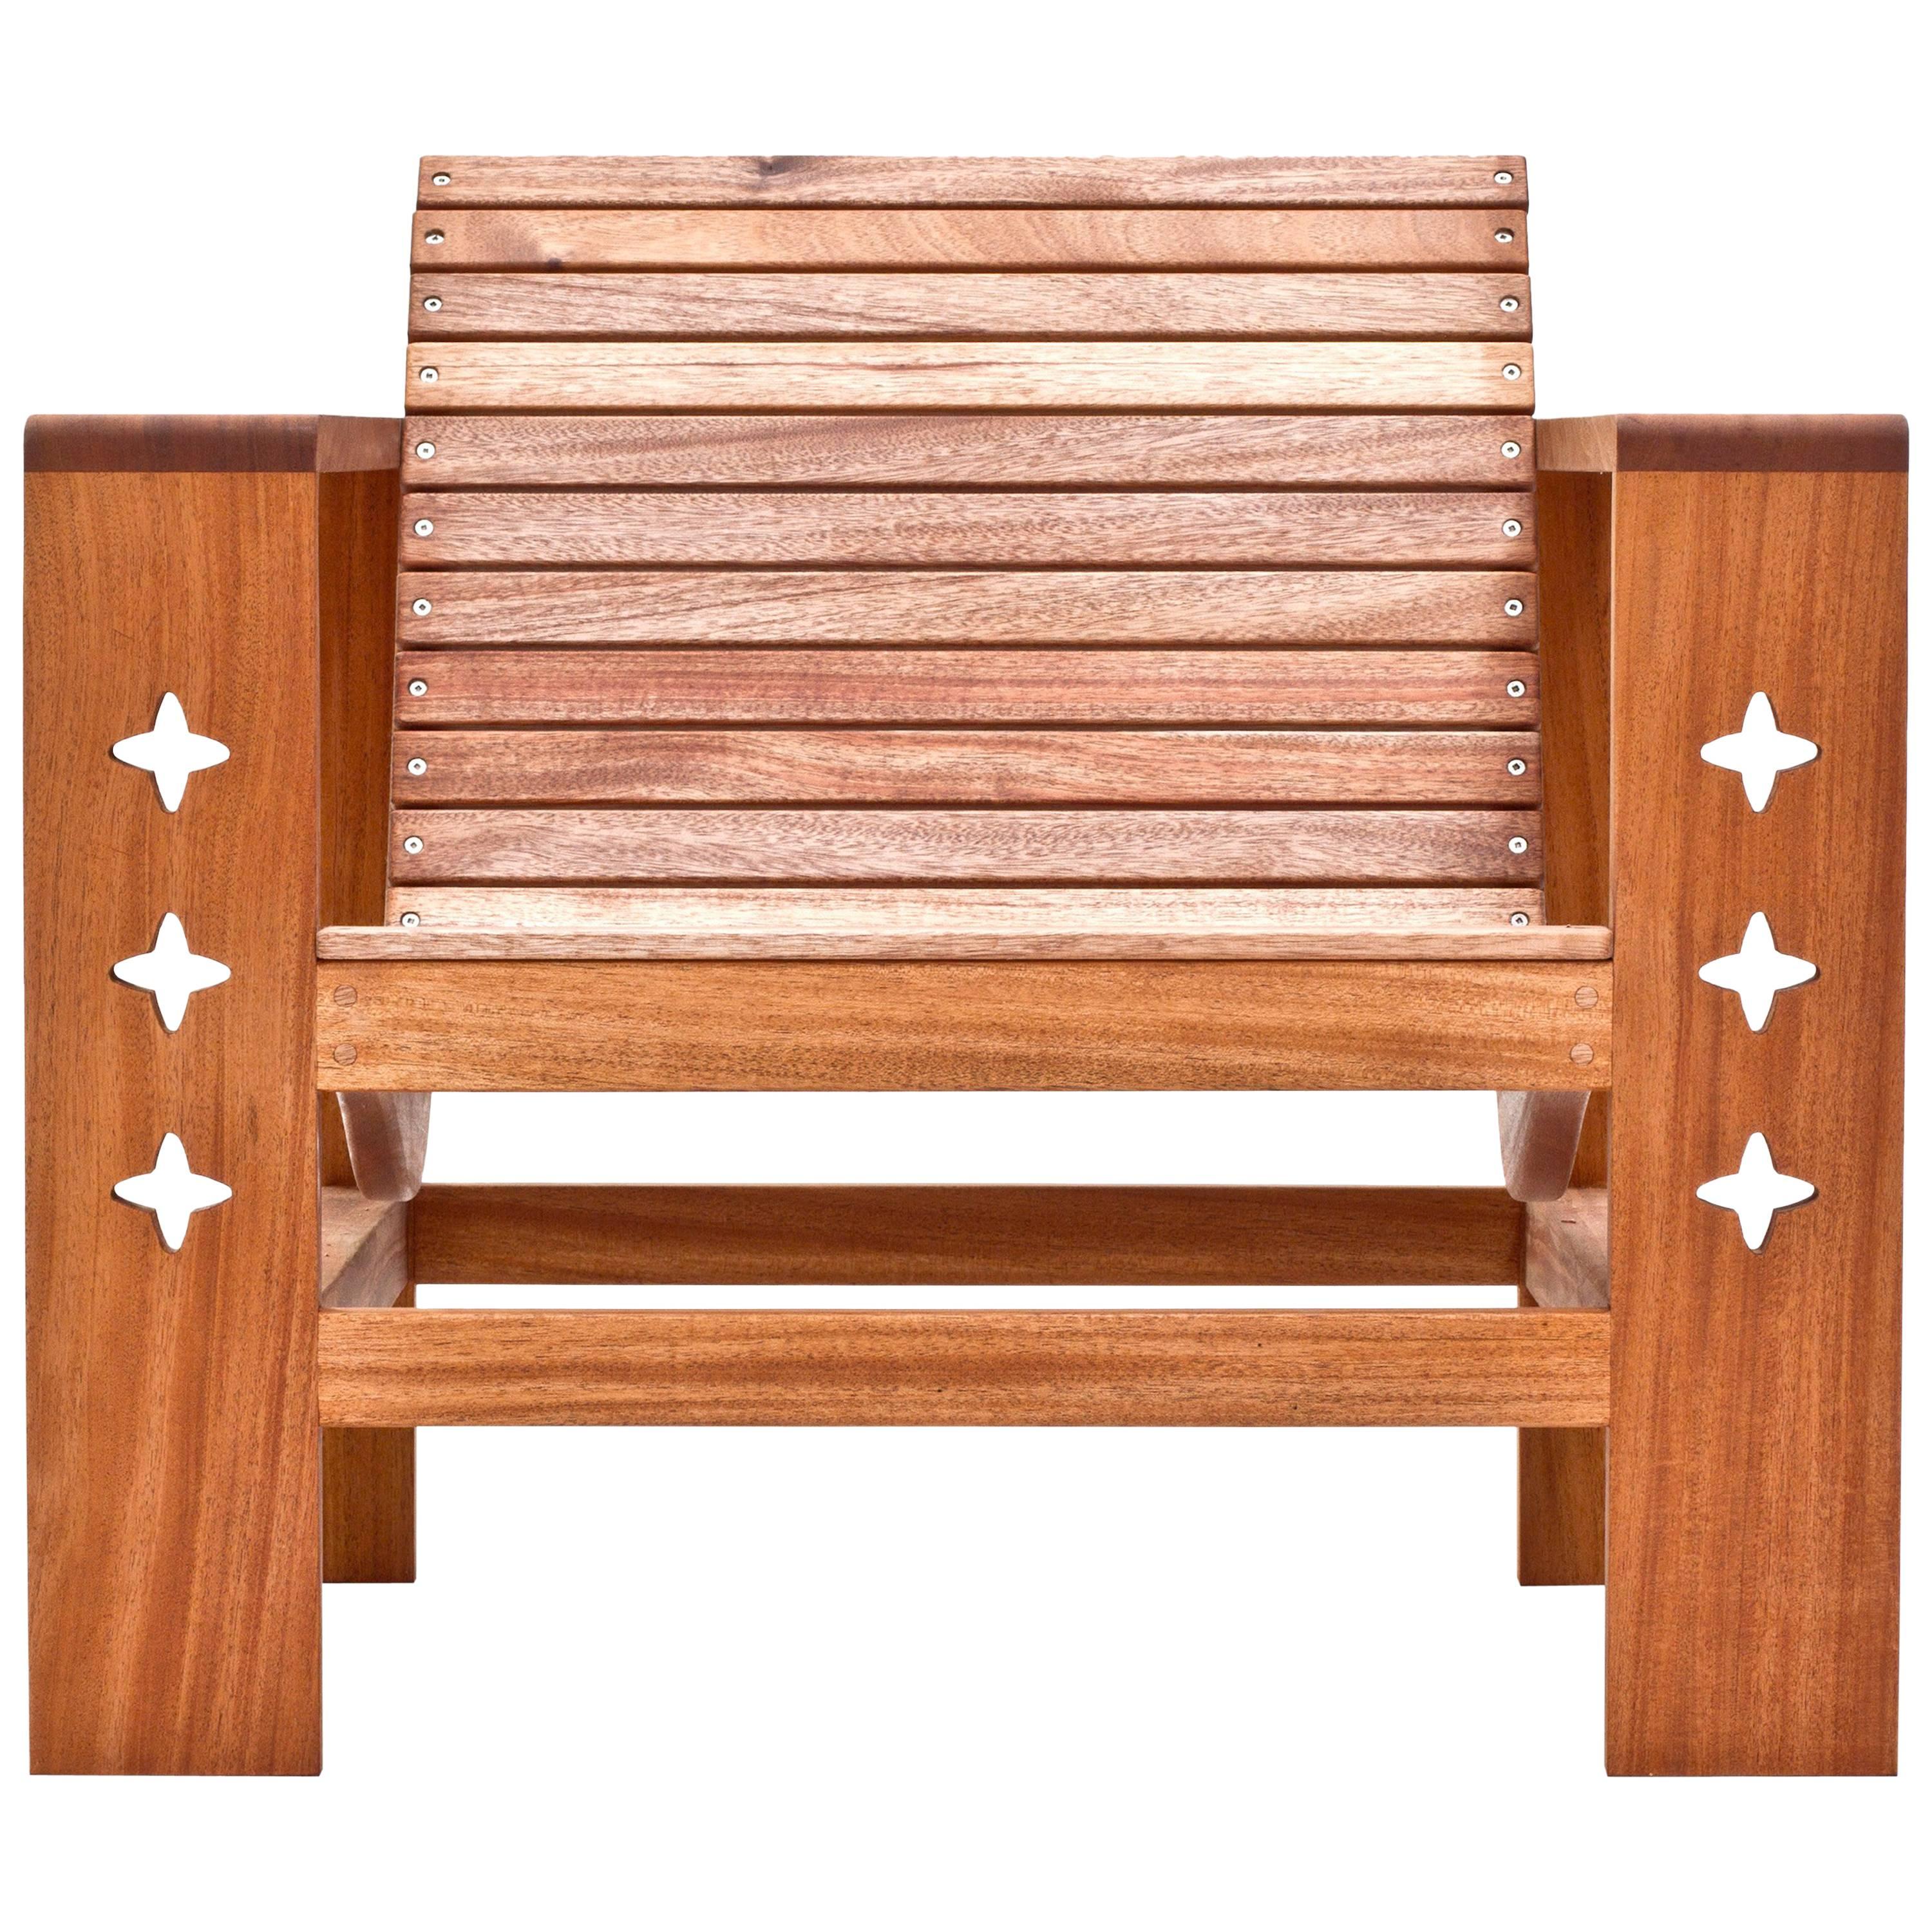 Uti 'Ooh-Tee' Lounge Chair in Mahogany with Natural Finish, Wooda Original